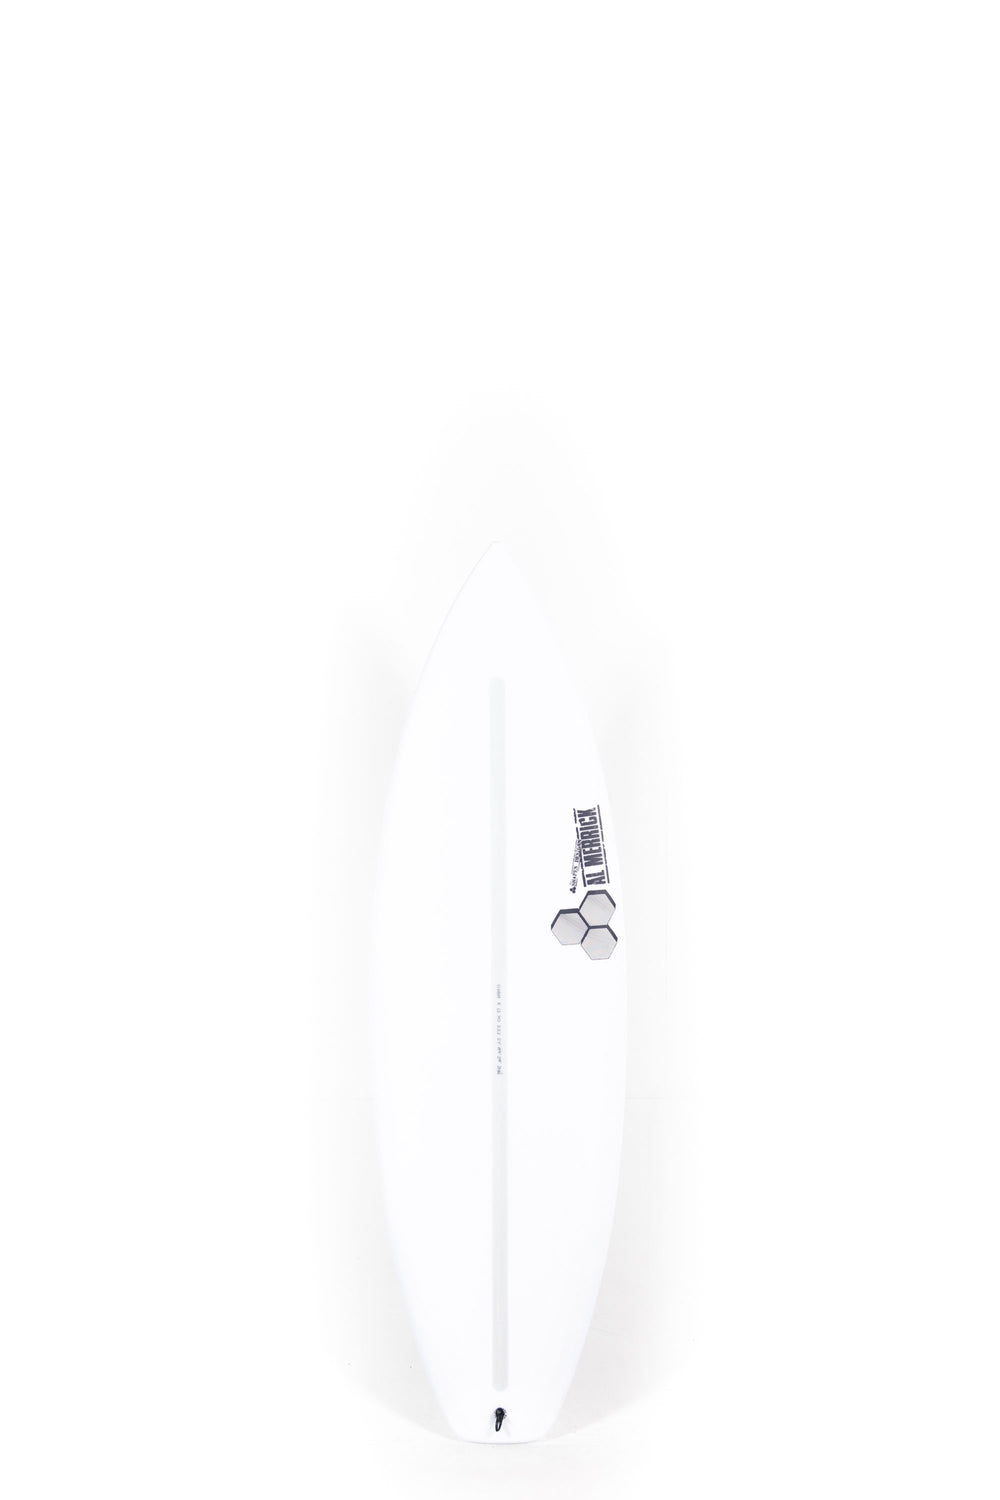 Pukas Surf Shop - Channel Islands - DUMPSTER DIVER 2 Spine Tek by Britt Merrick -  5'7